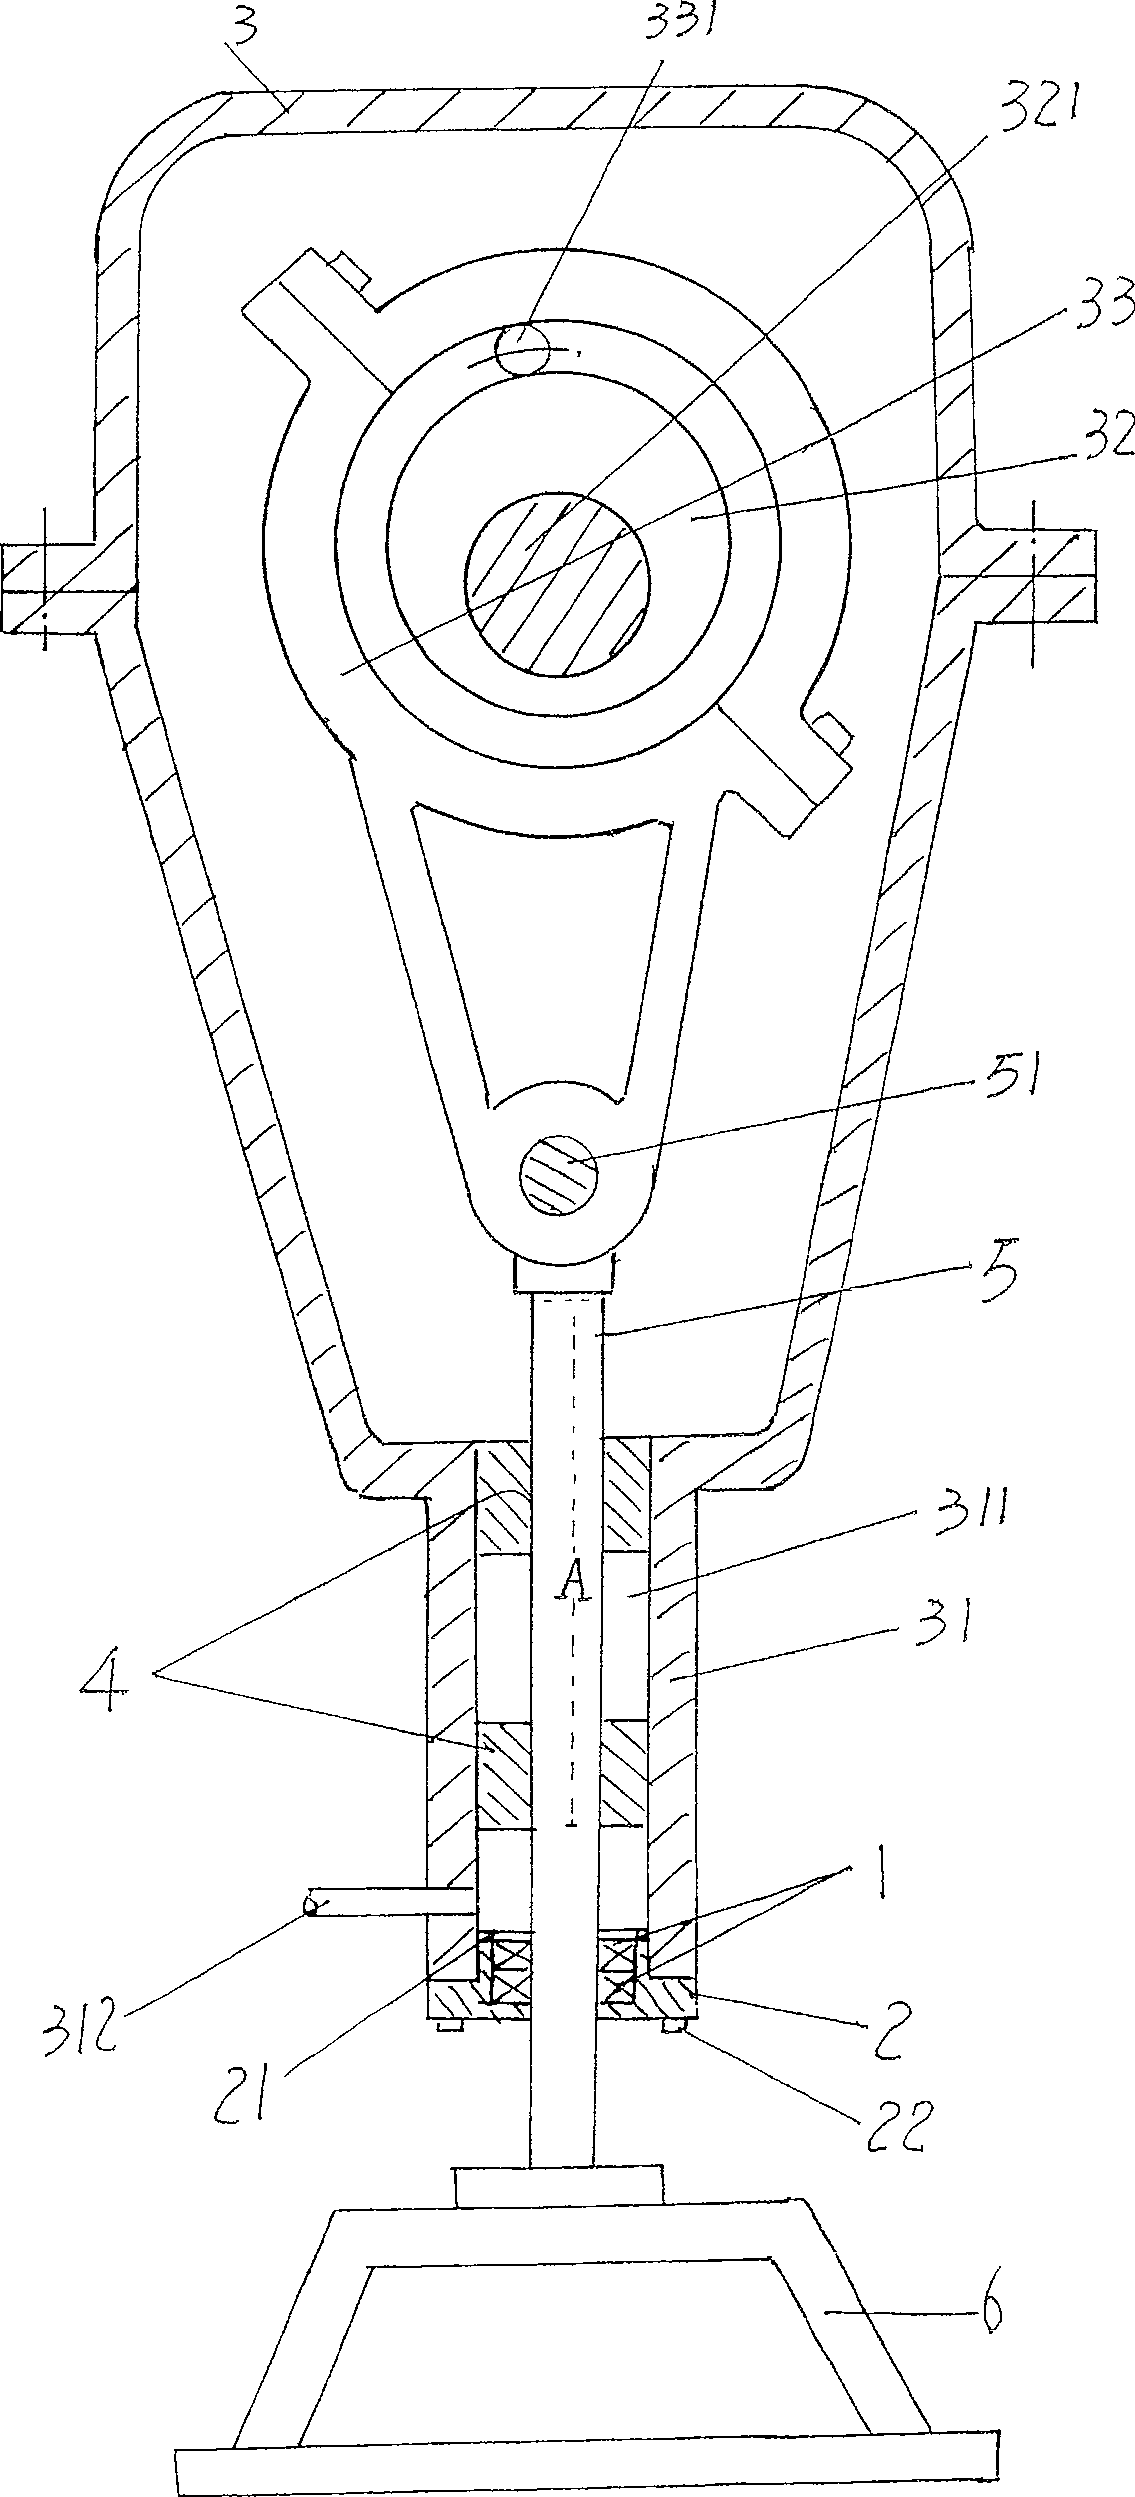 Guide pillar sealing mechanism for needle machine